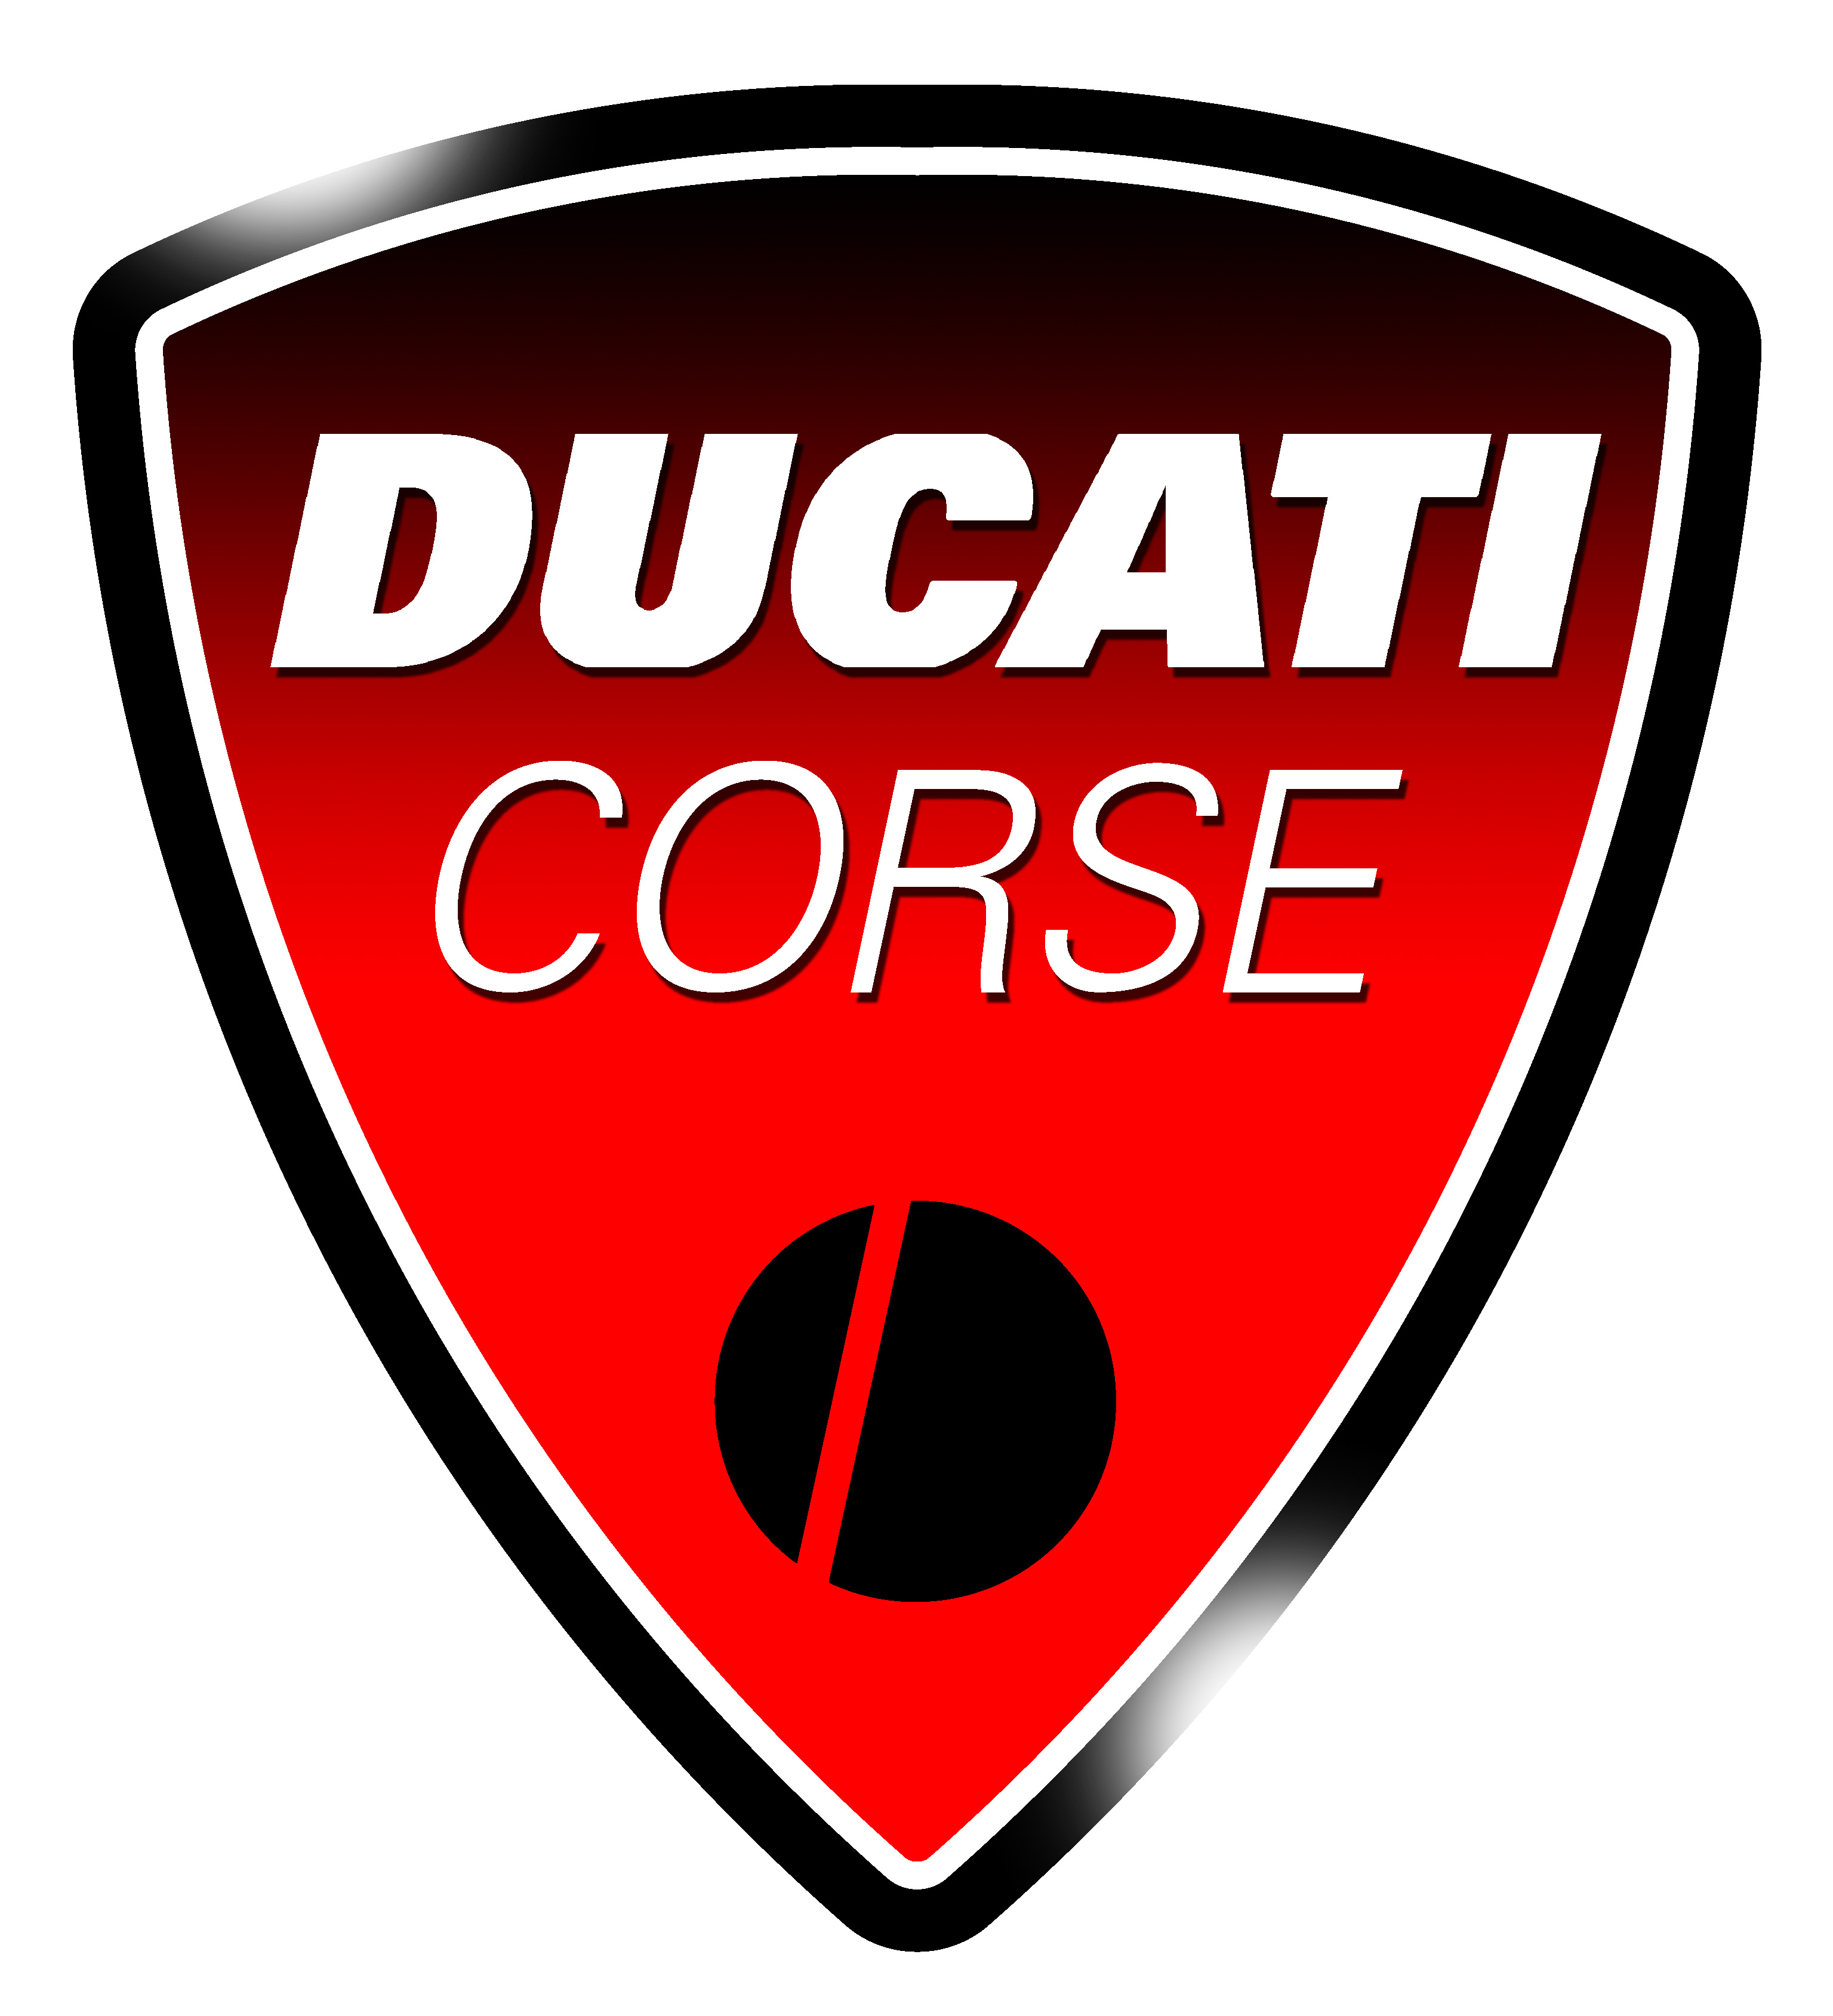 Ducati Buell Responsechips Logo Wallpaper ImageBankbiz